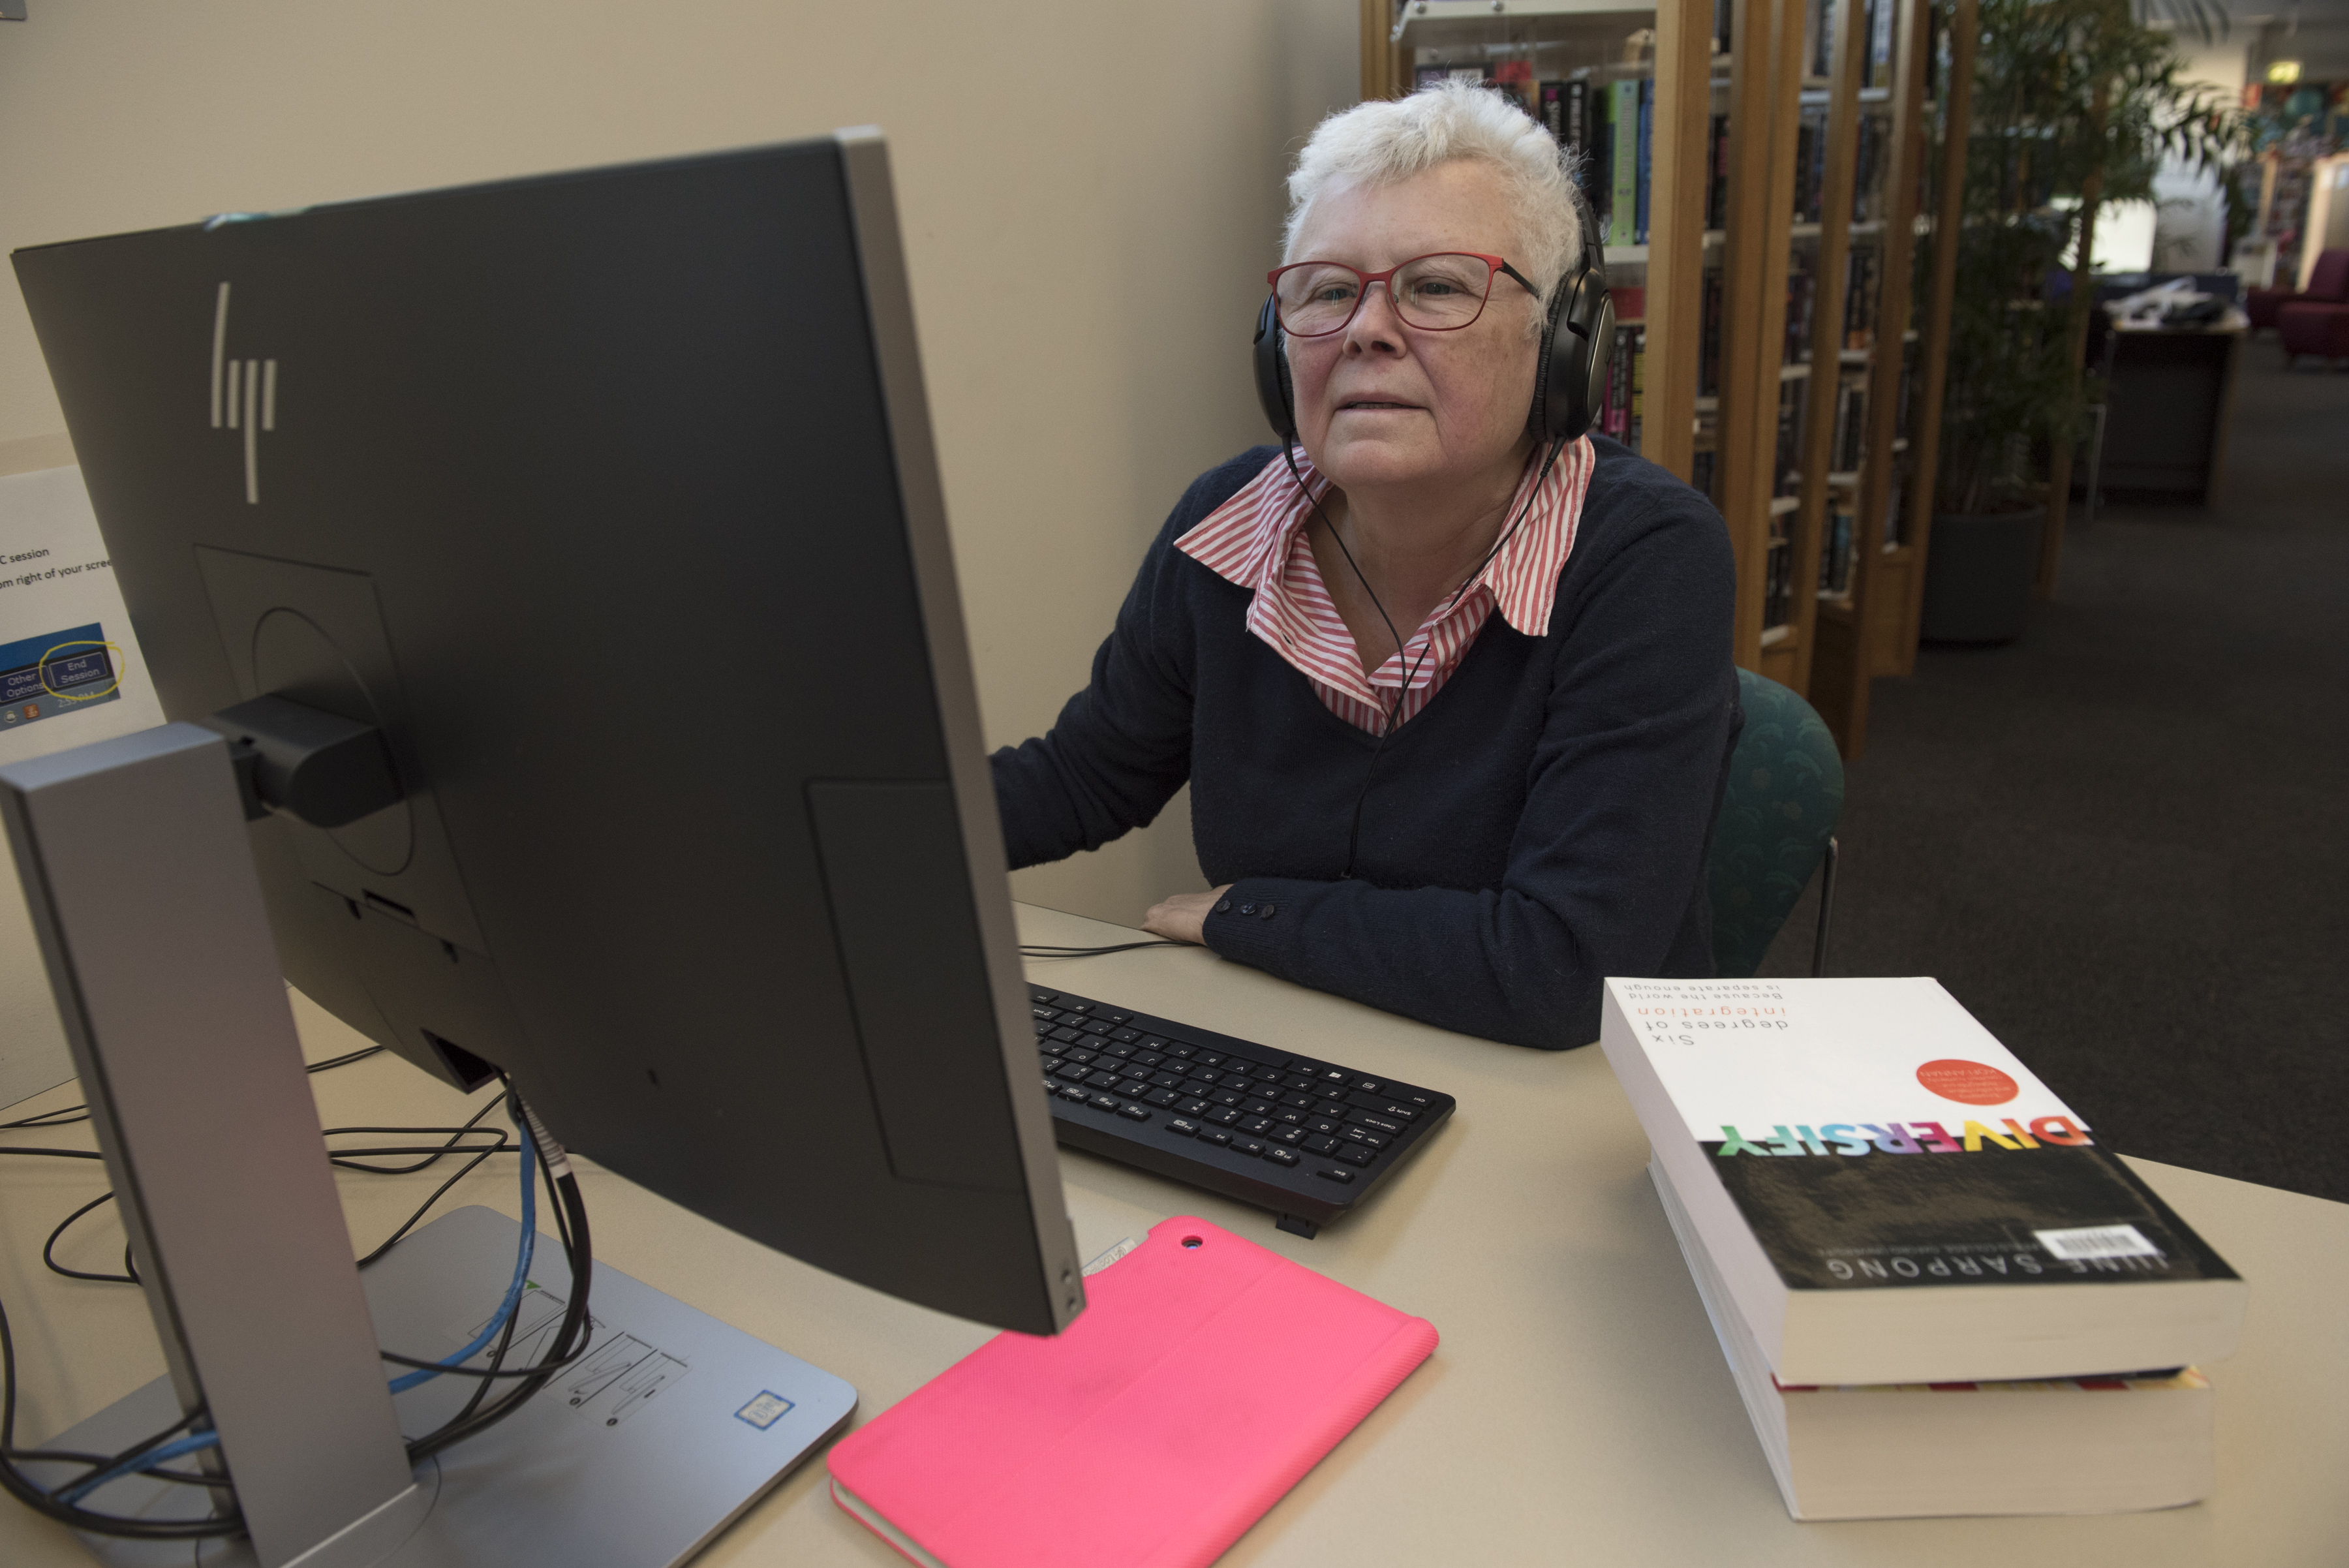 Senior woman using computer